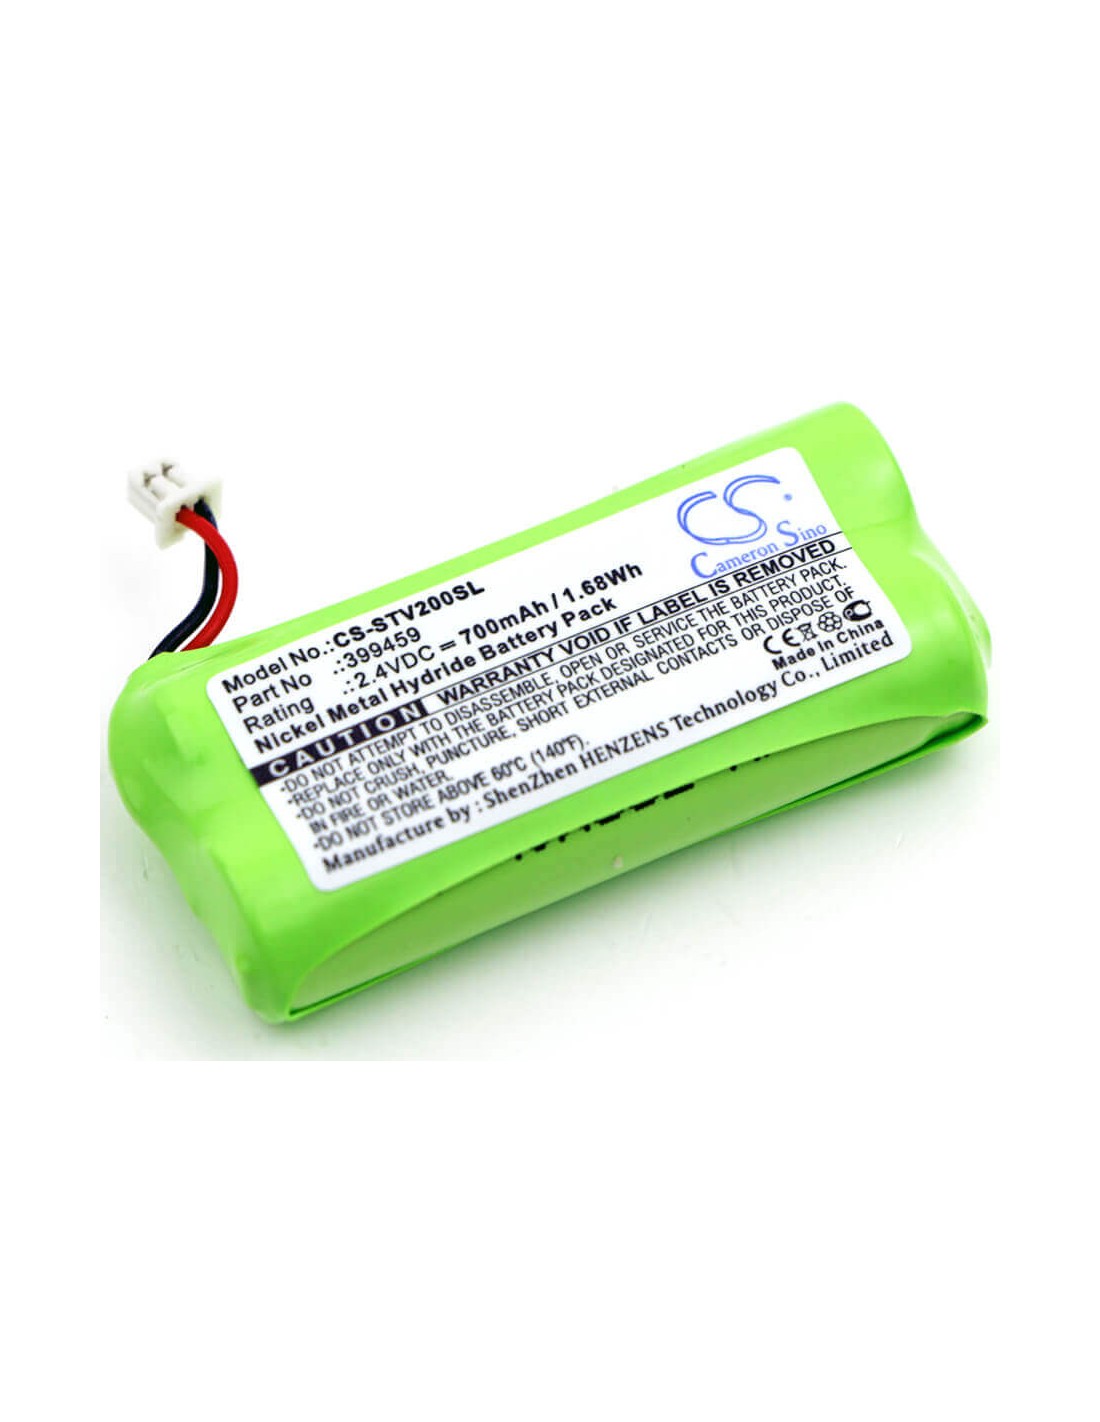 Battery for Stageclix, Jack V2 Transmitter 2.4V, 700mAh - 1.68Wh